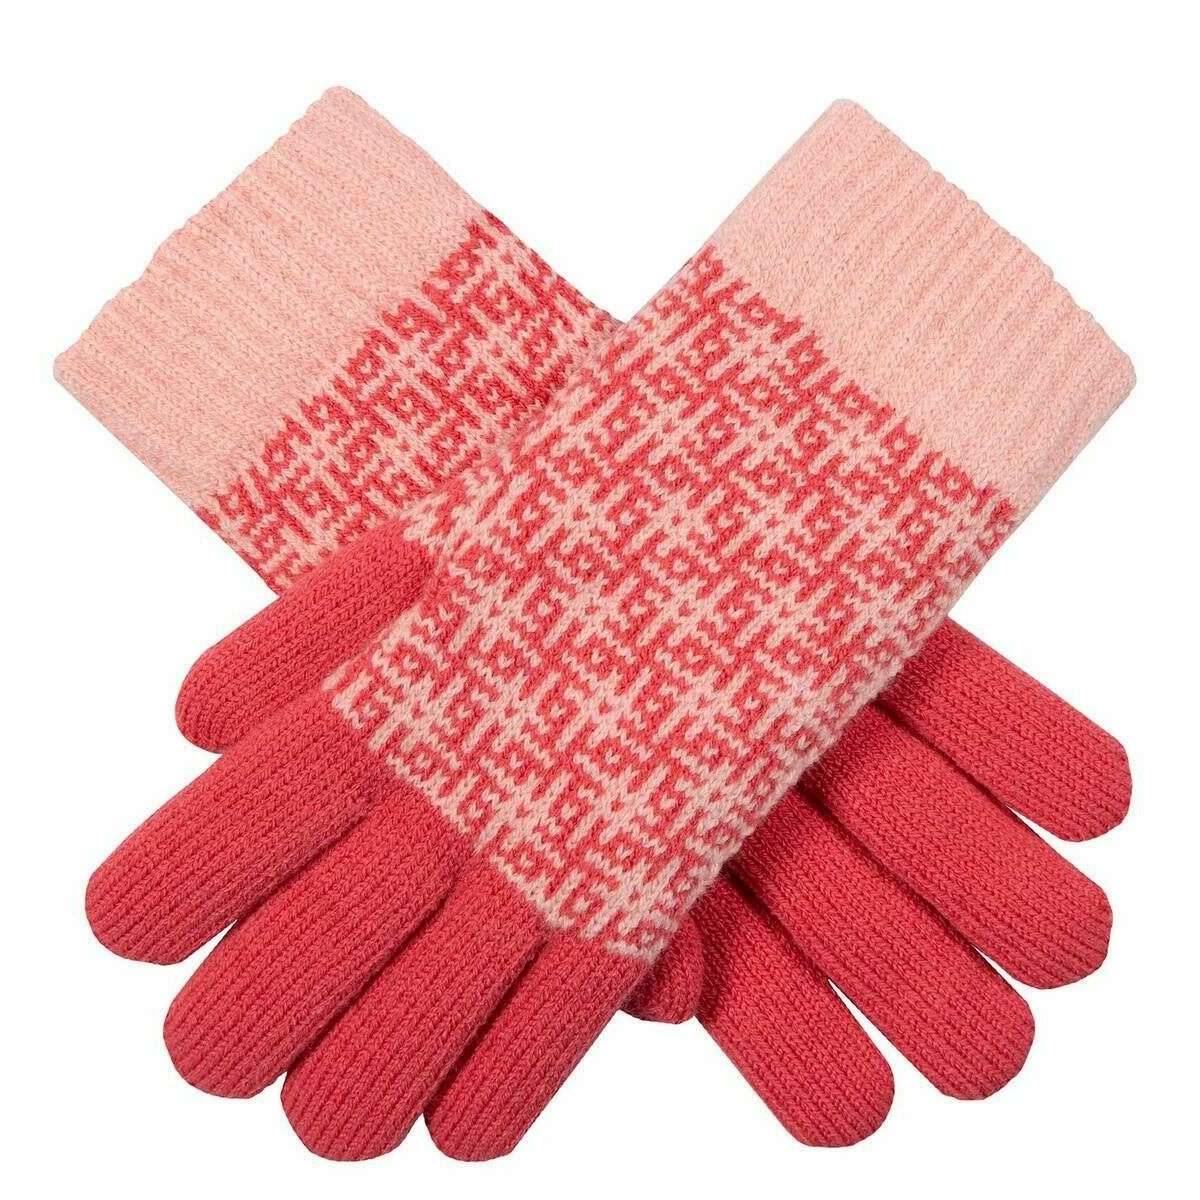 Dents Hashtag Jacquard Knitted Gloves - Fuchsia/Powder Pink